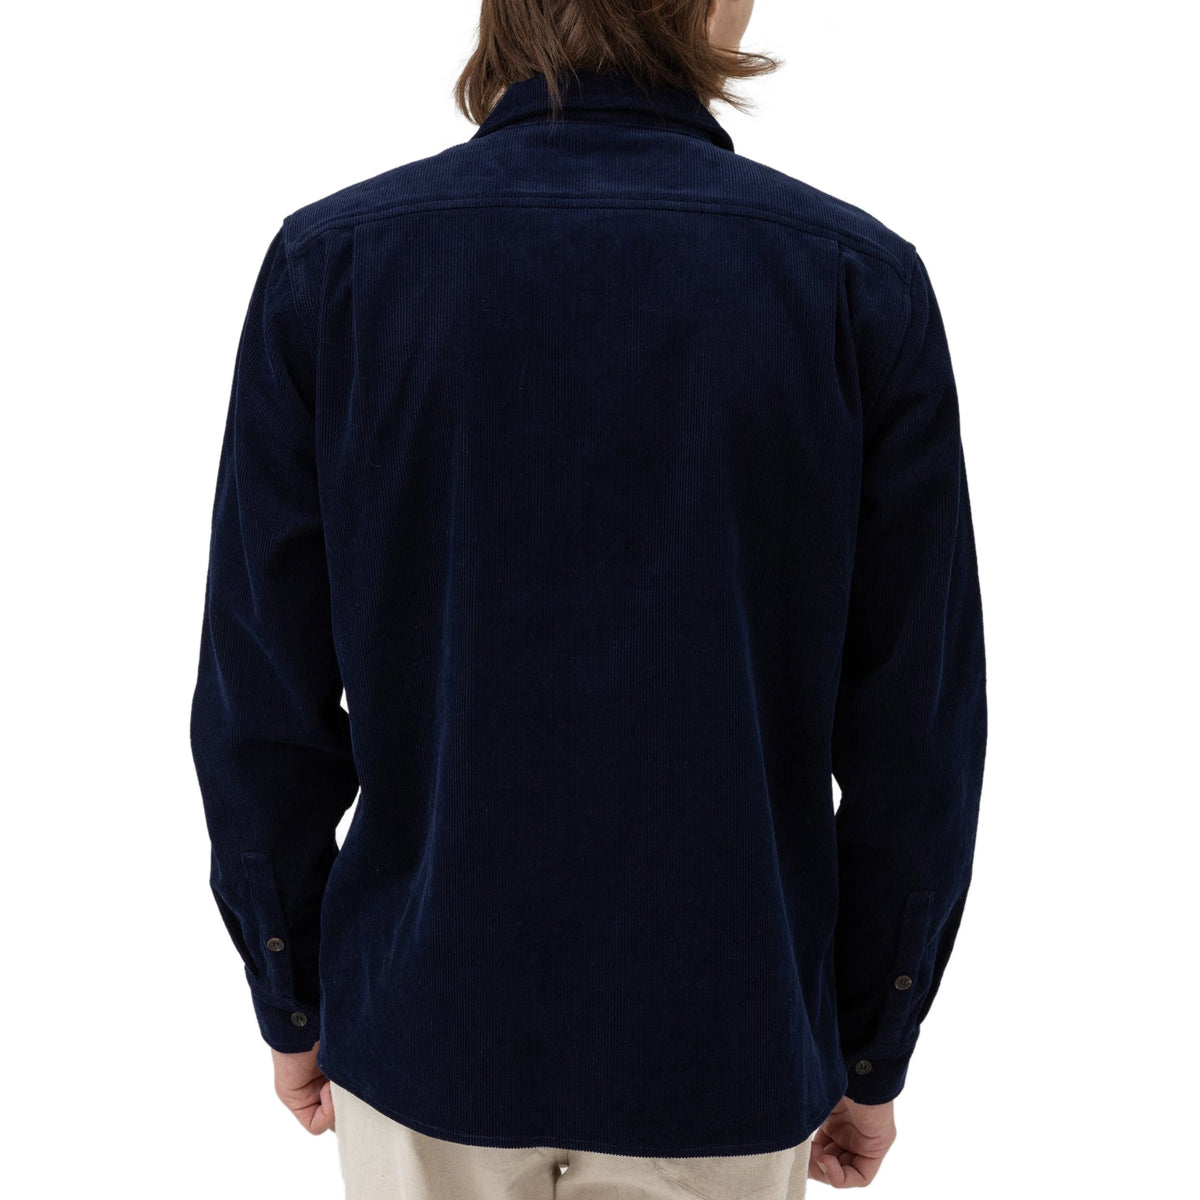 Rhythm Corduroy Long Sleeve Shirt - Navy image 2